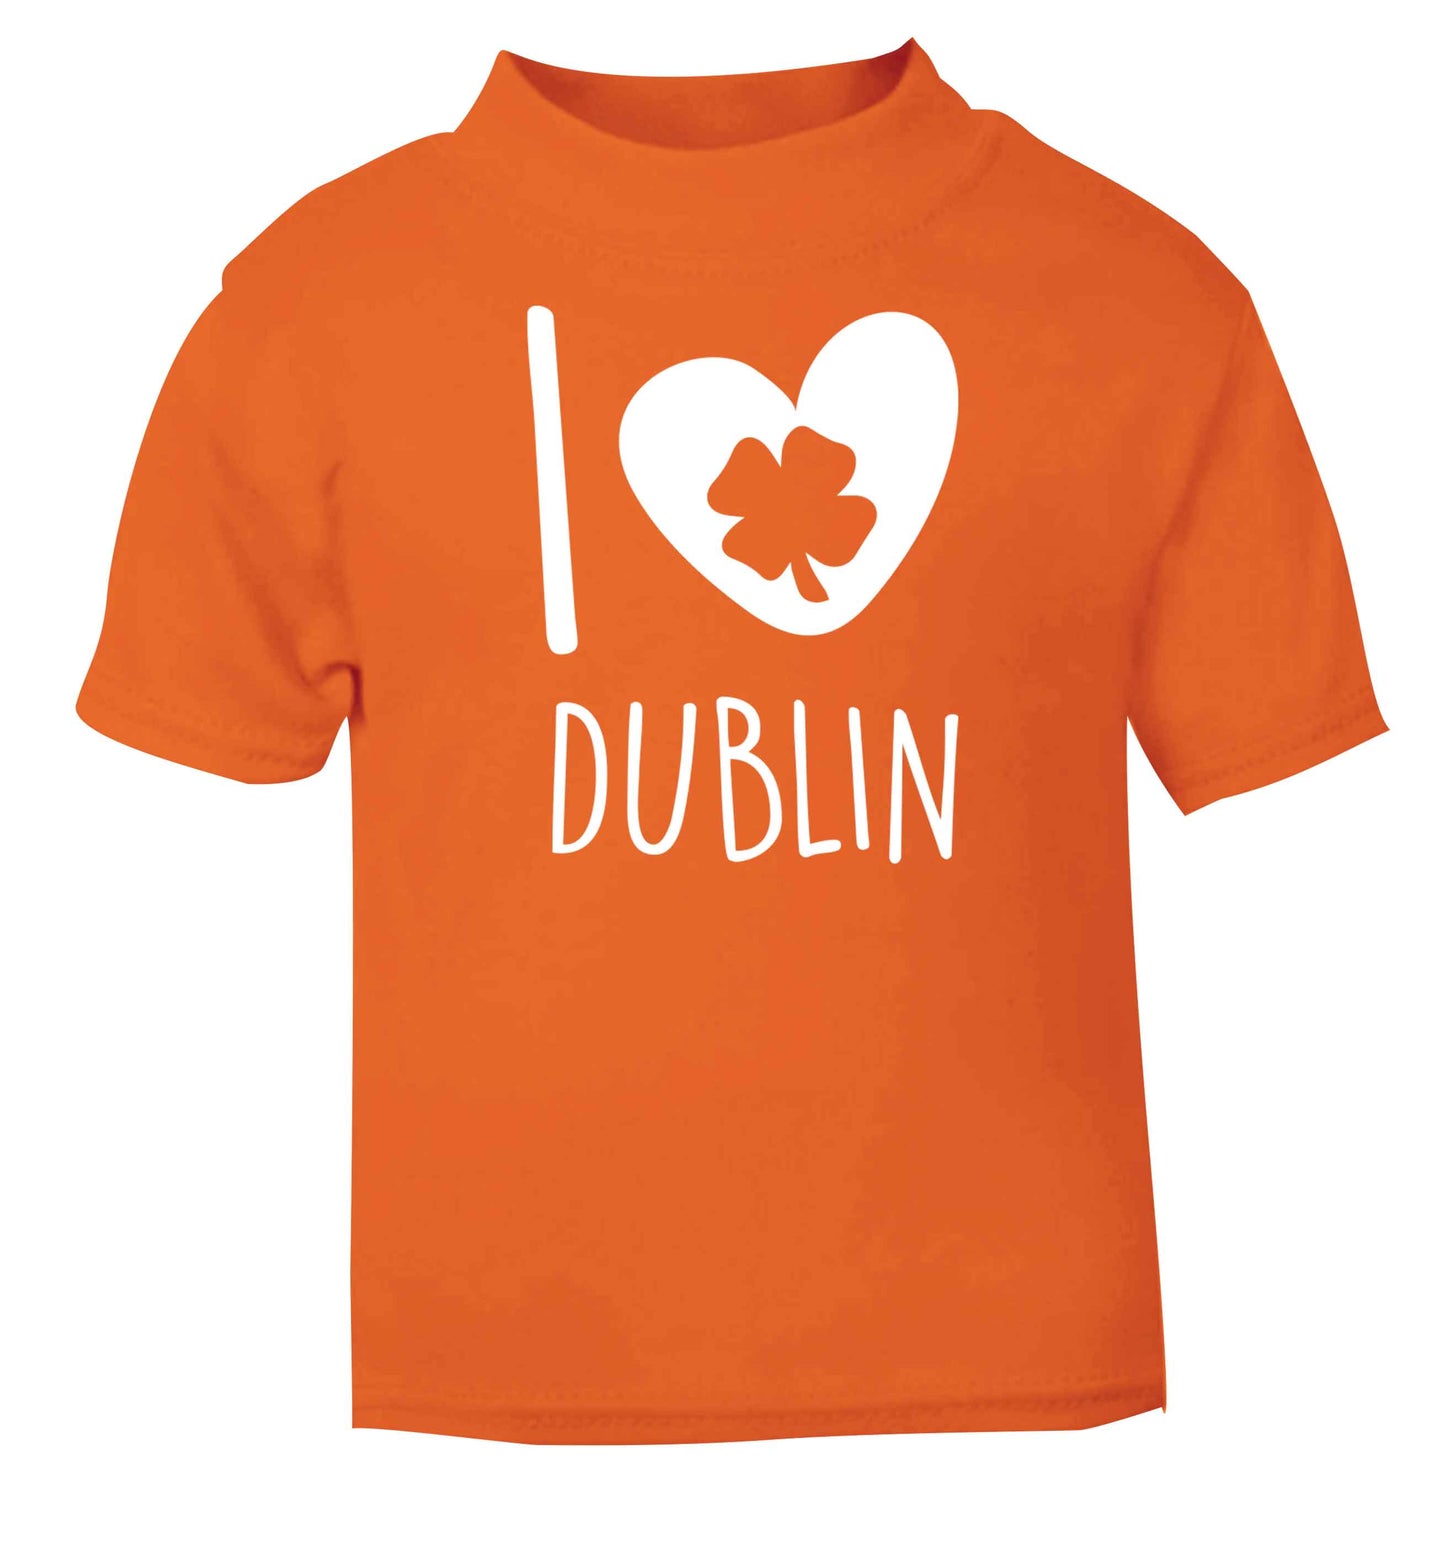 I love Dublin orange baby toddler Tshirt 2 Years